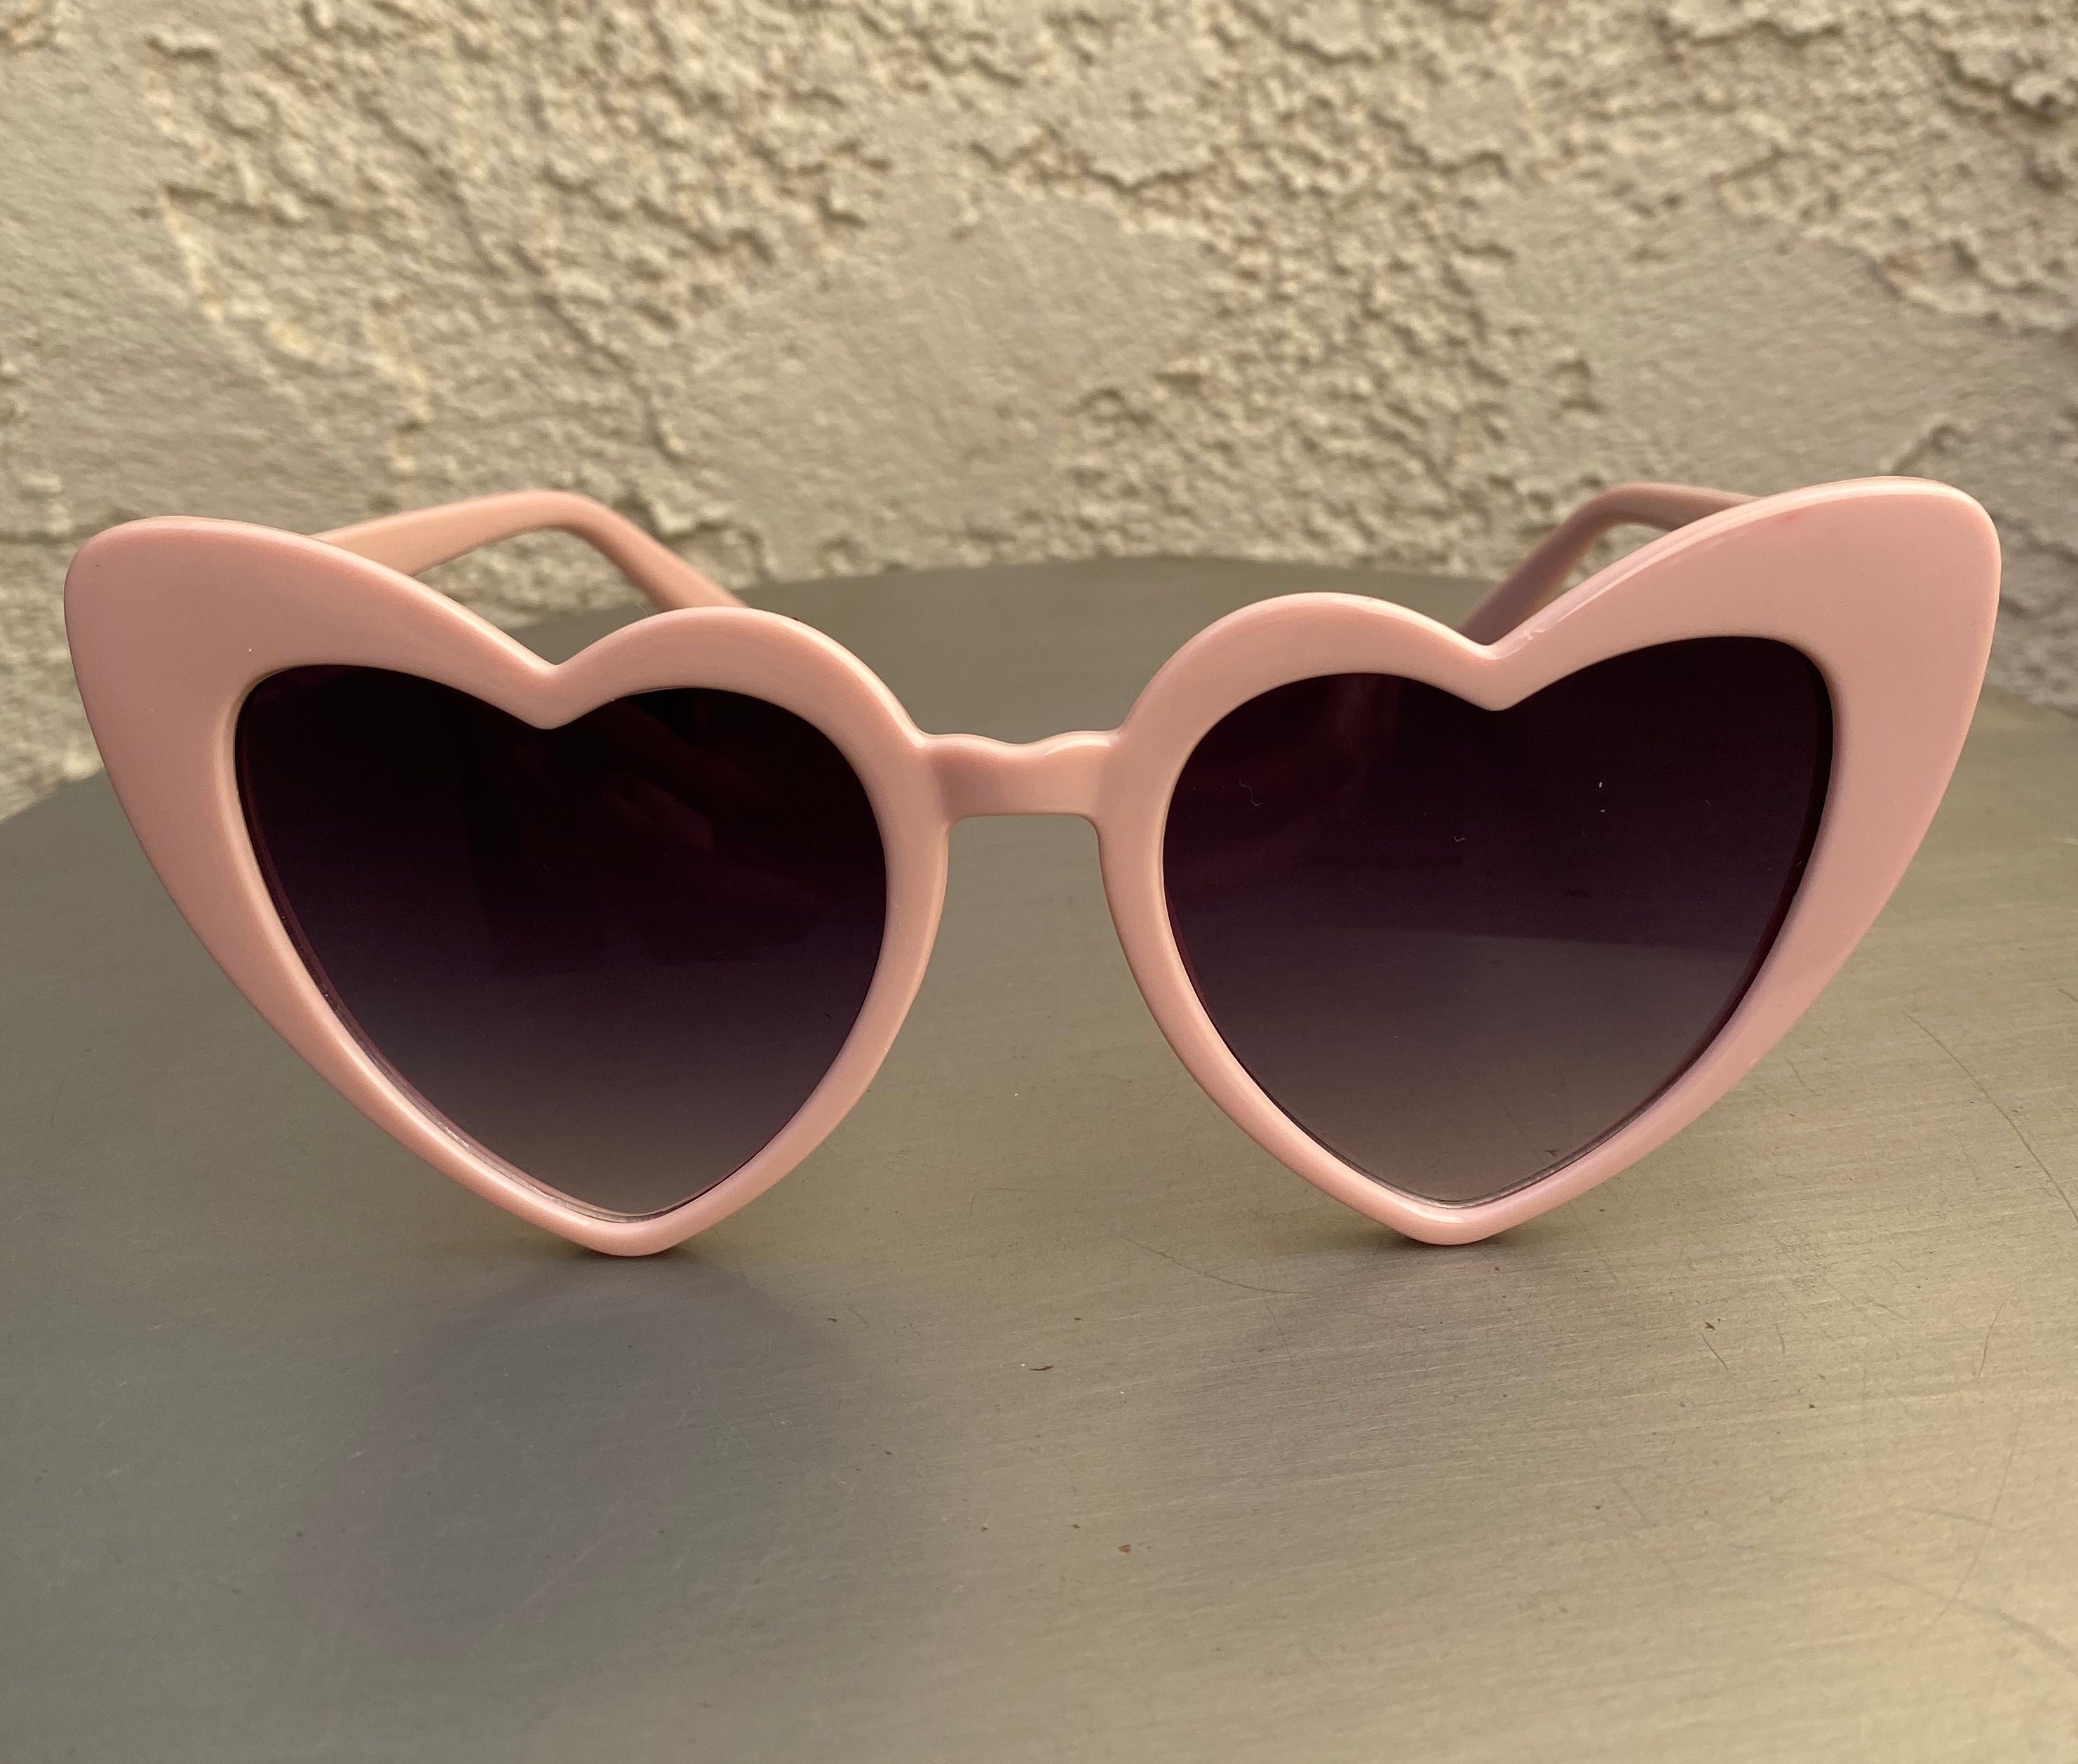 Heart Shaped Sunglasses "Penny"